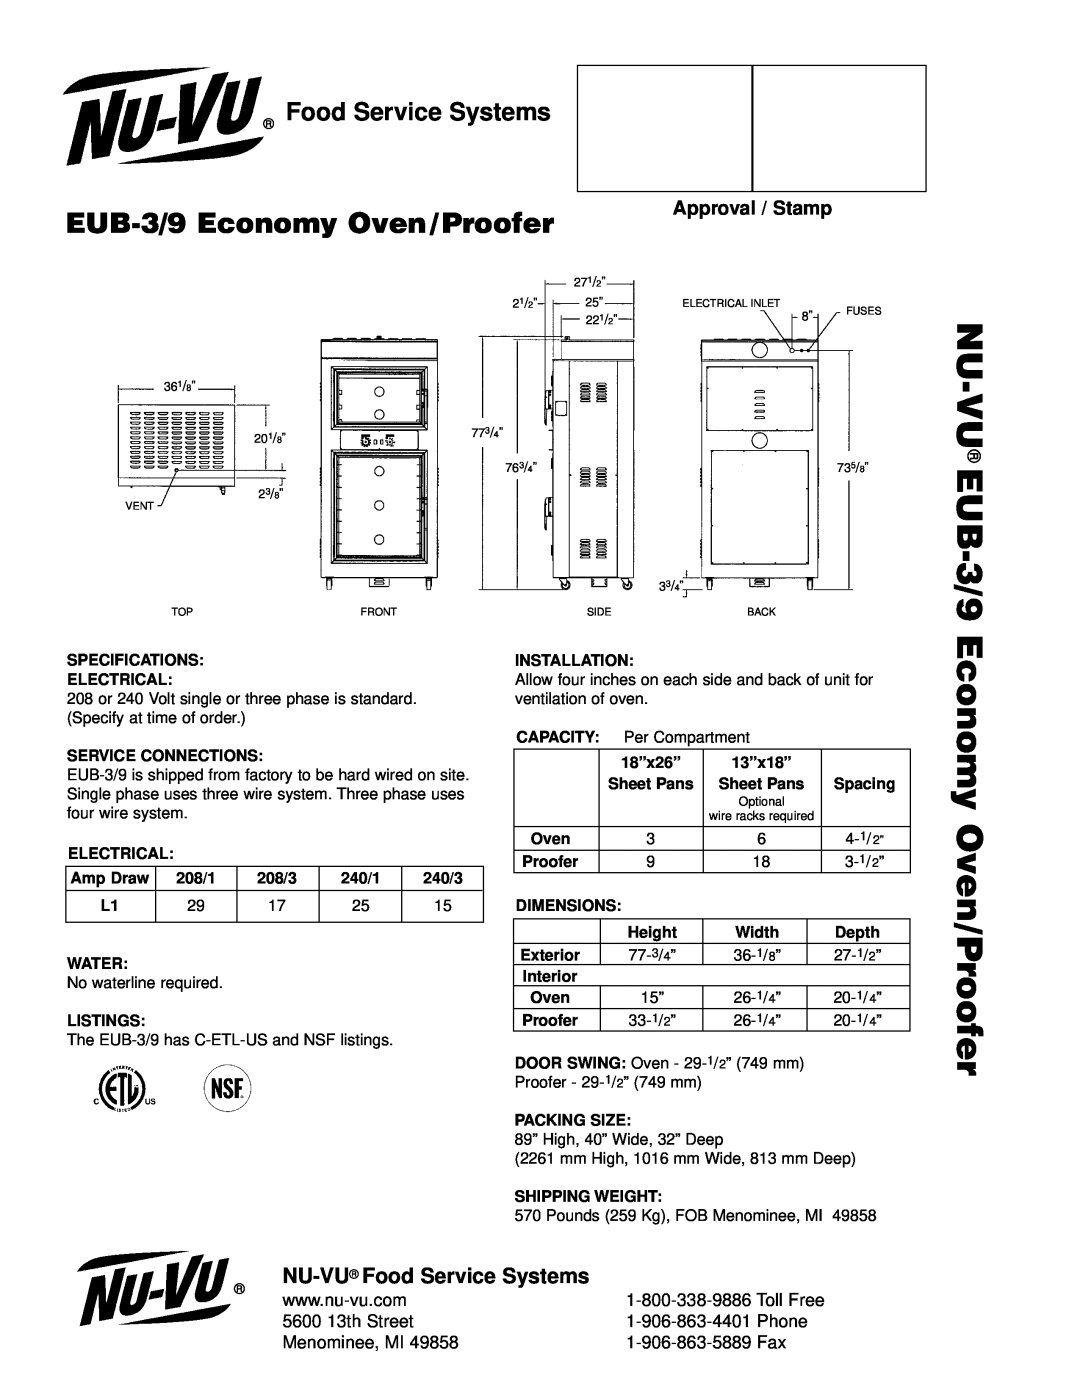 Nu-Vu manual NU-VU EUB-3/9, EUB-3/9Economy Oven/Proofer, NU-VU Food Service Systems, Approval / Stamp, Phone 